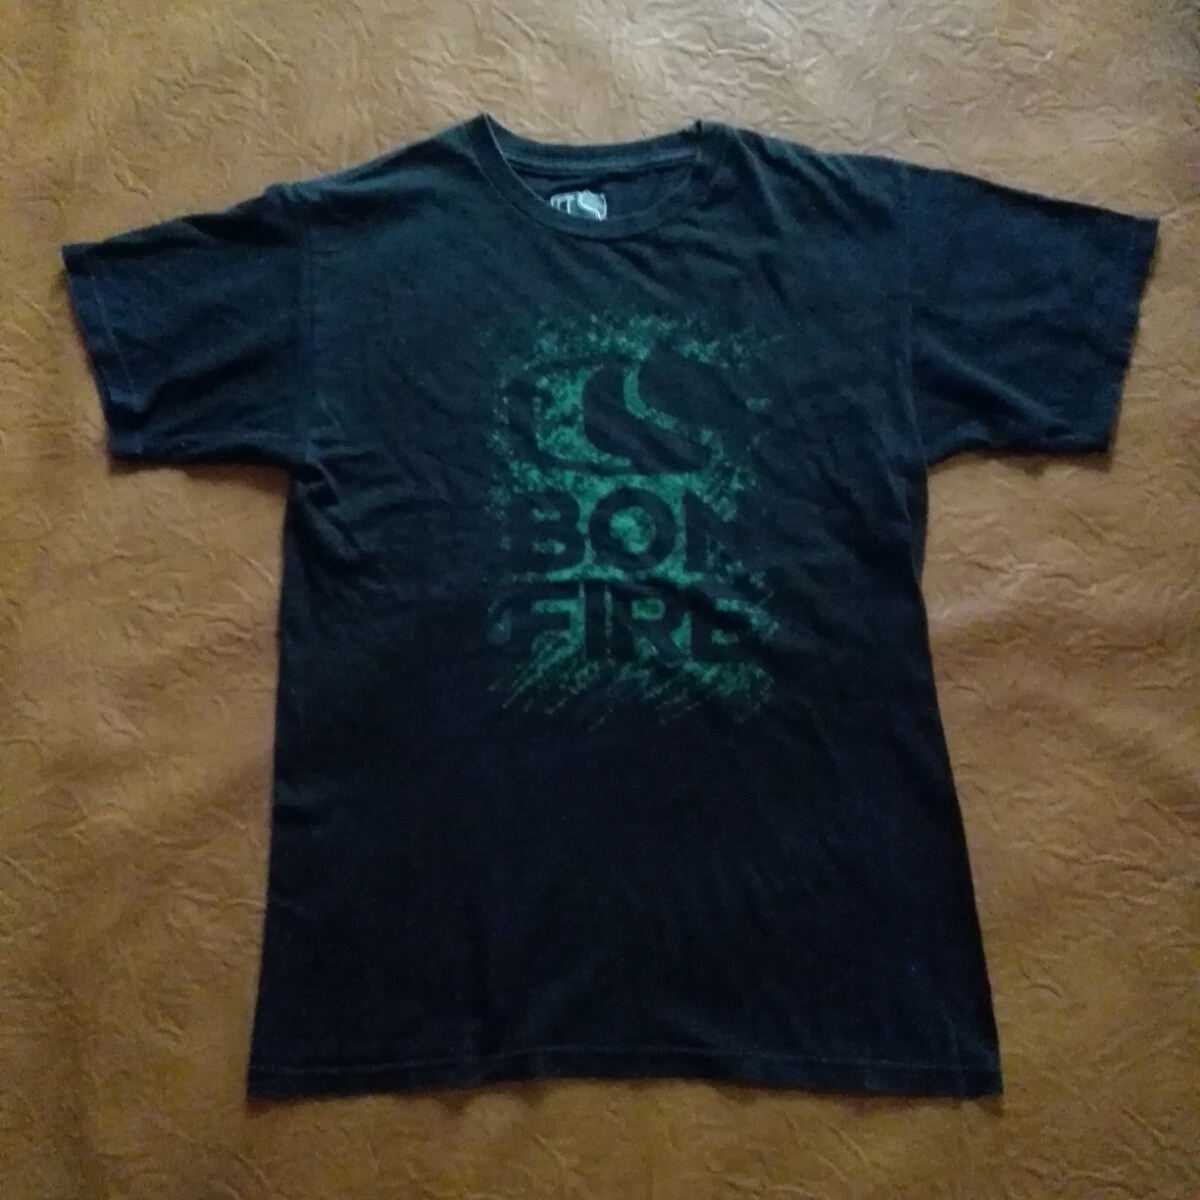 BONFIREbon fire - Logo print T-shirt black S size USA made Tee